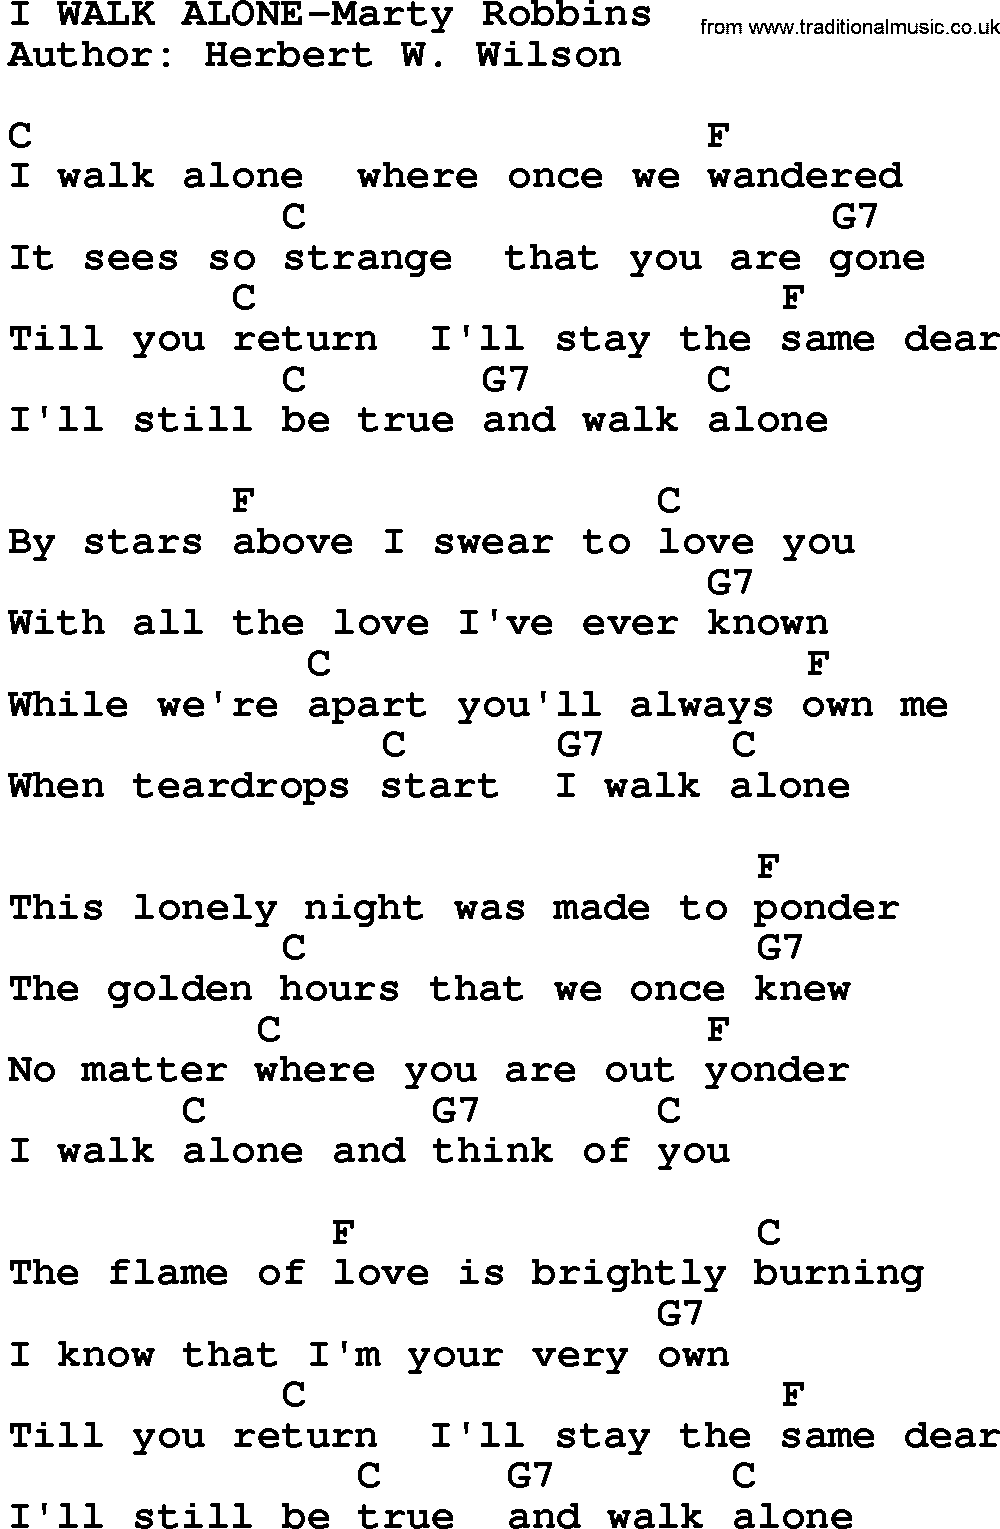 Country music song: I Walk Alone-Marty Robbins lyrics and chords